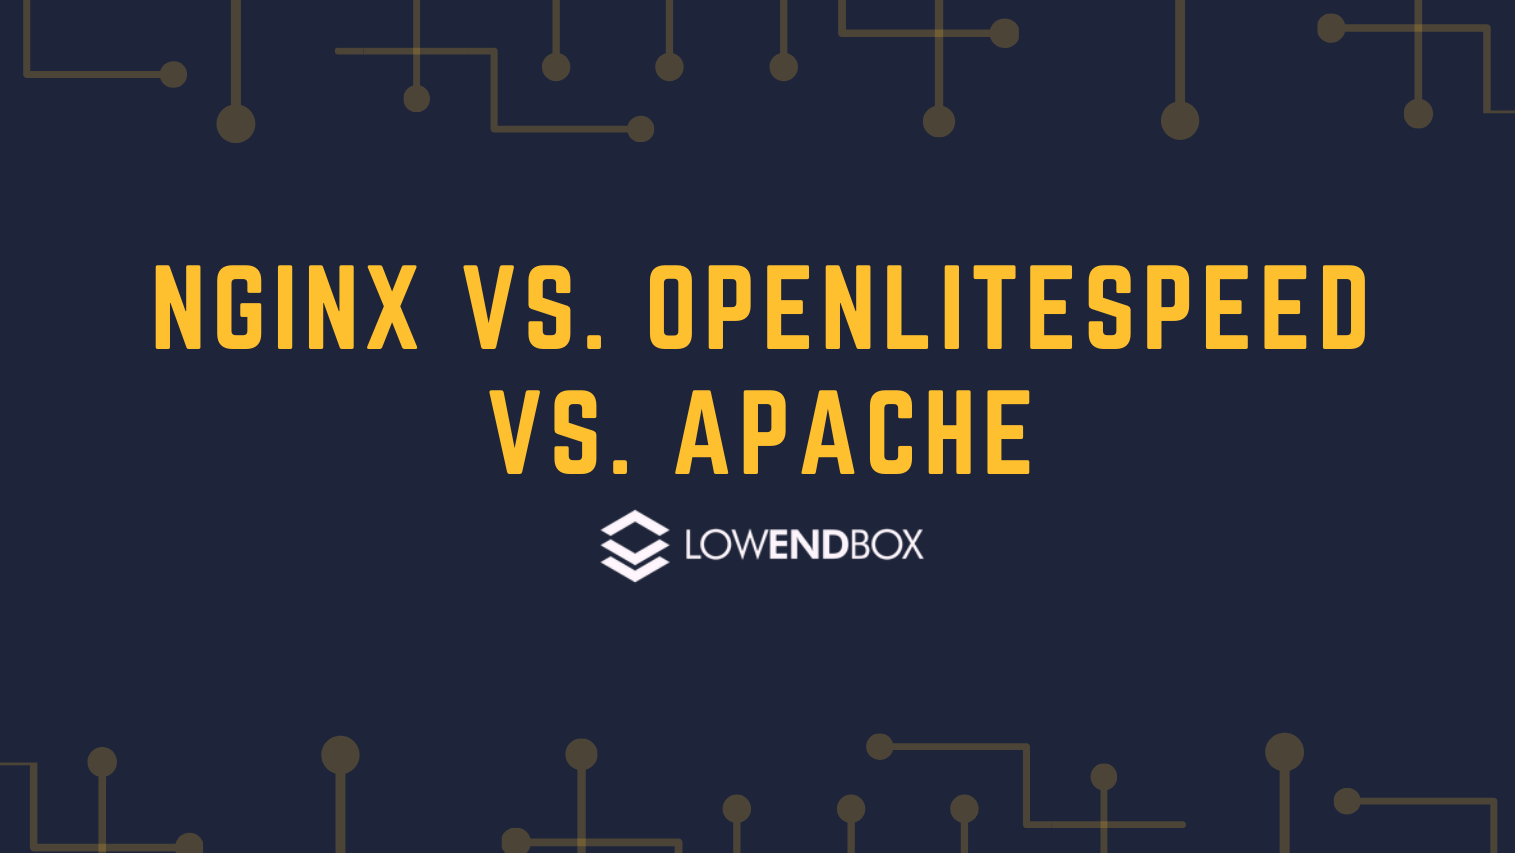 Nginx vs. OpenLiteSpeed vs. Apache